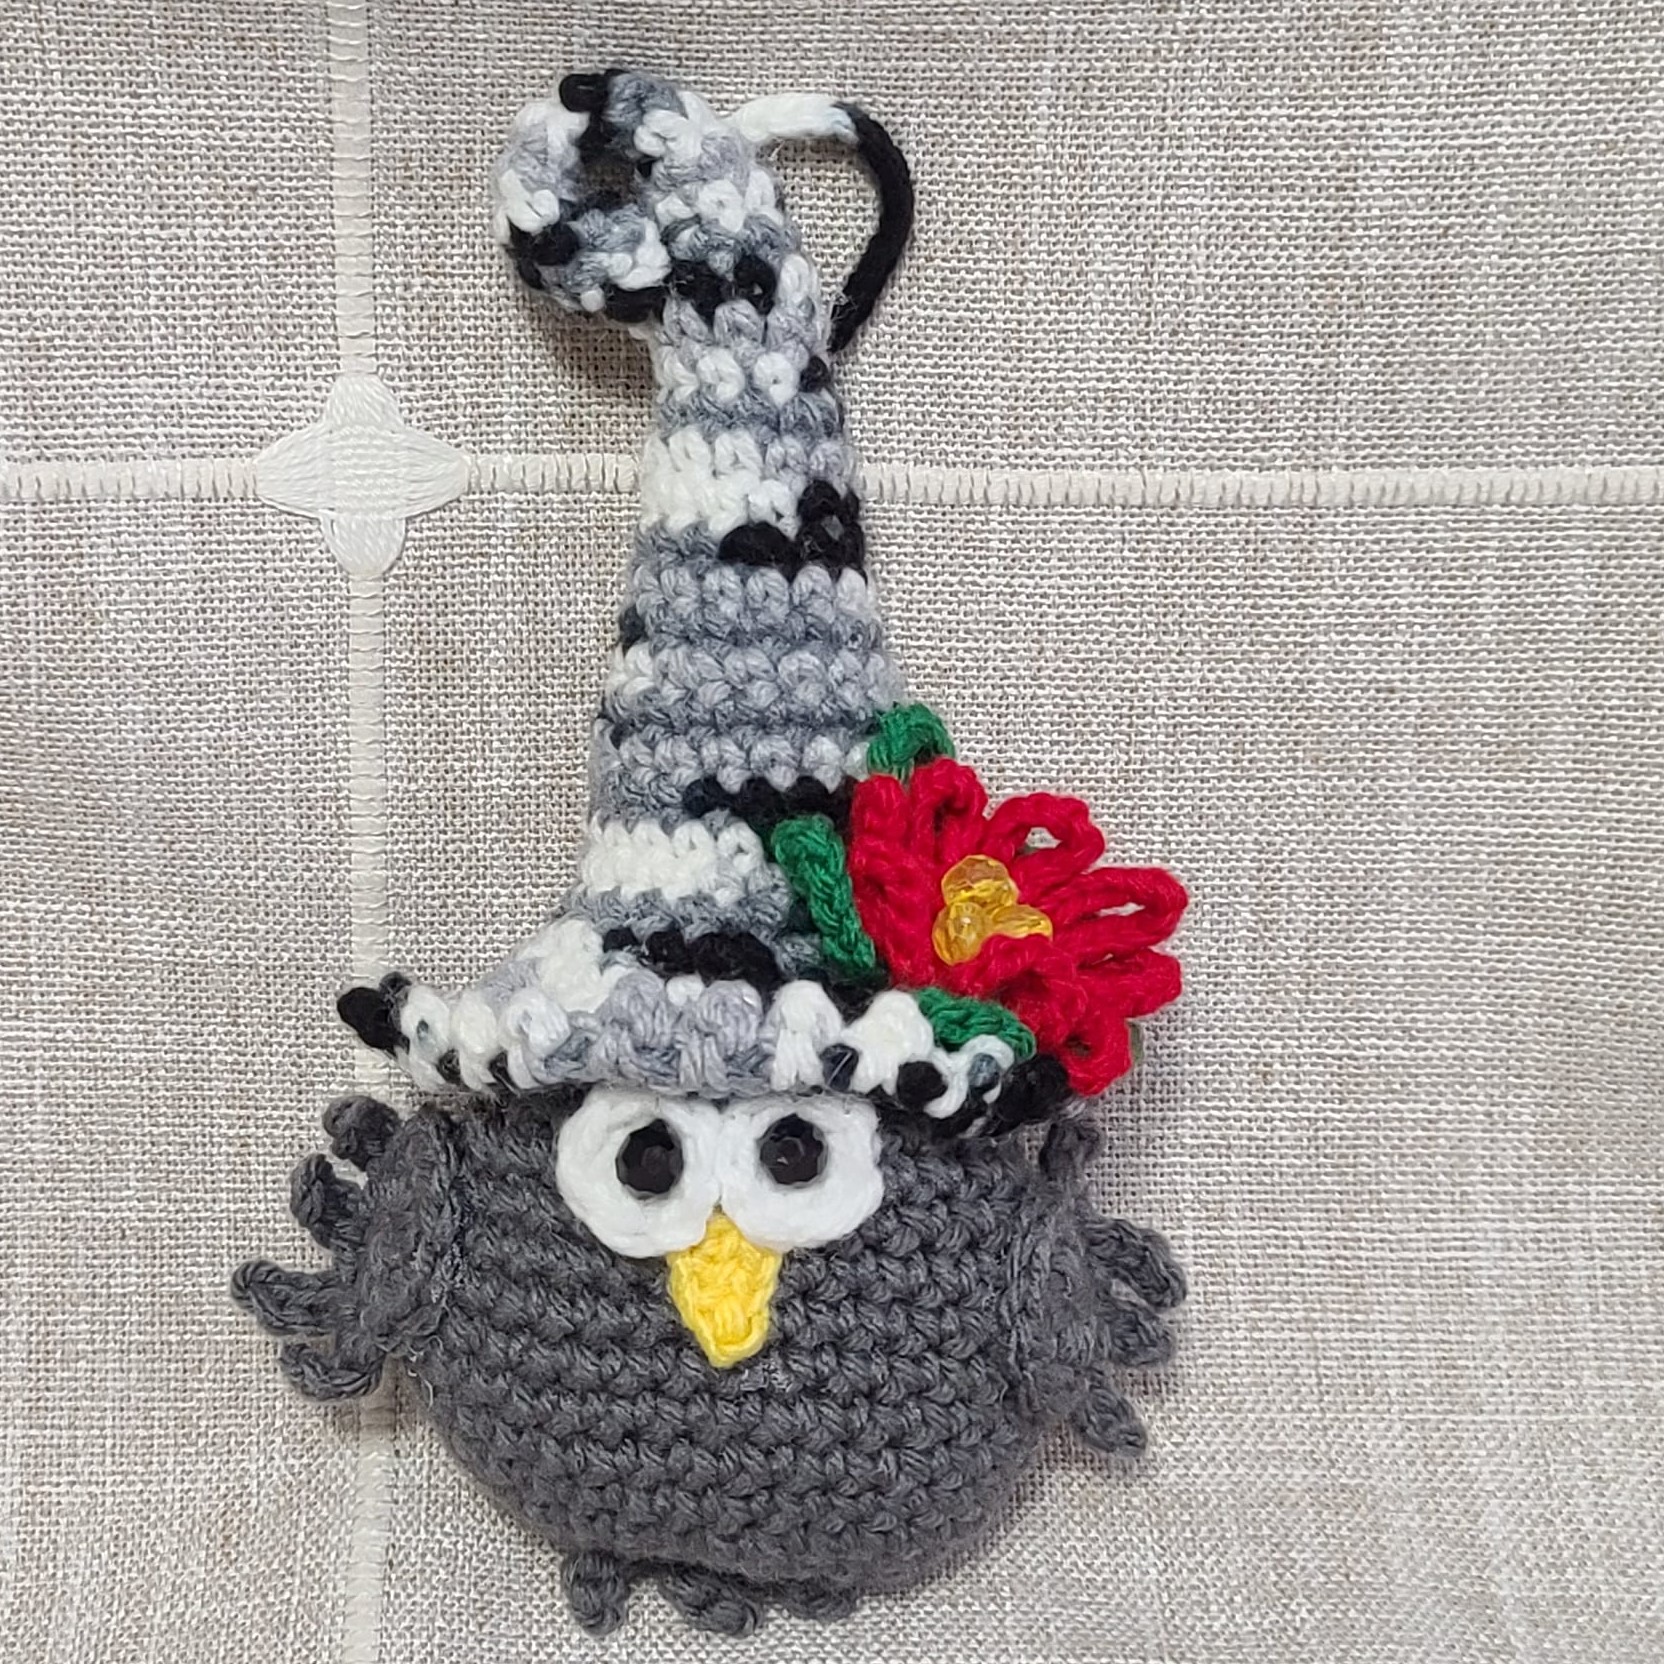 Crochet amigurumi handmad christmas owl ornament